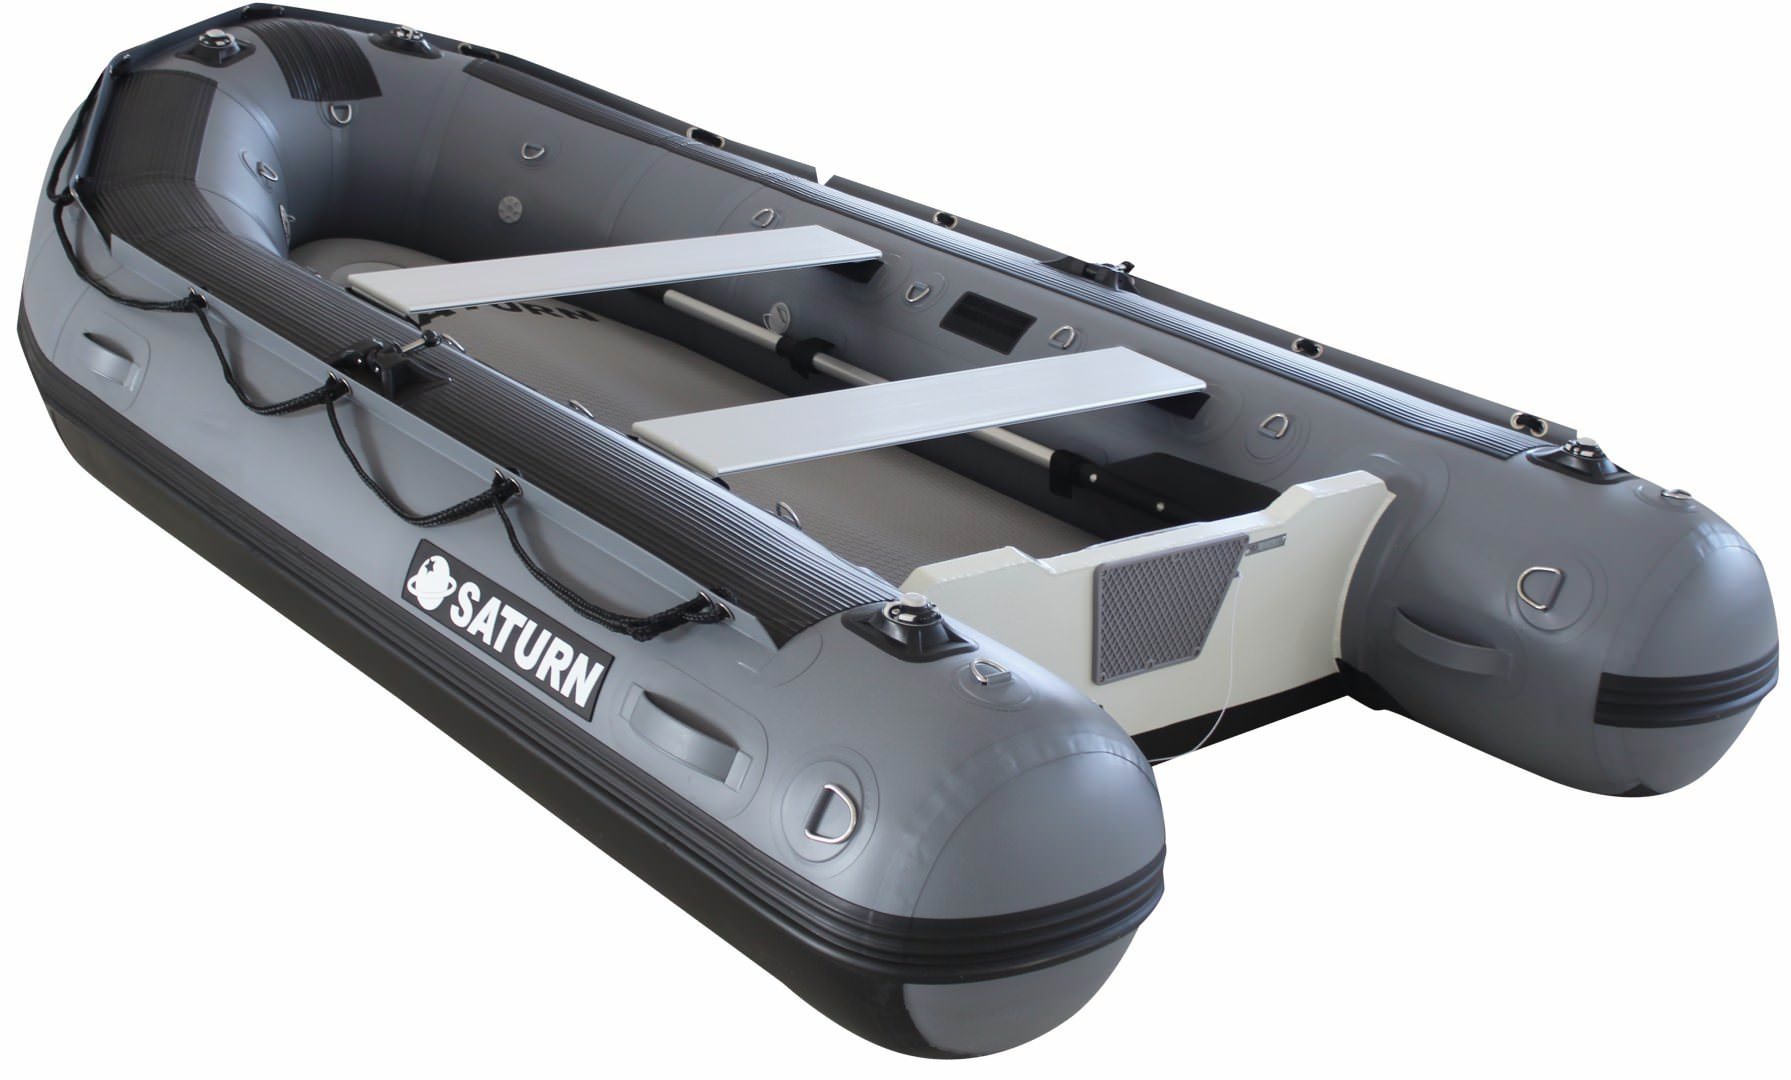 https://www.boatstogo.com/images/detailed/10/Saturn-Inflatable-Boat-XHD330DG__1_.JPG